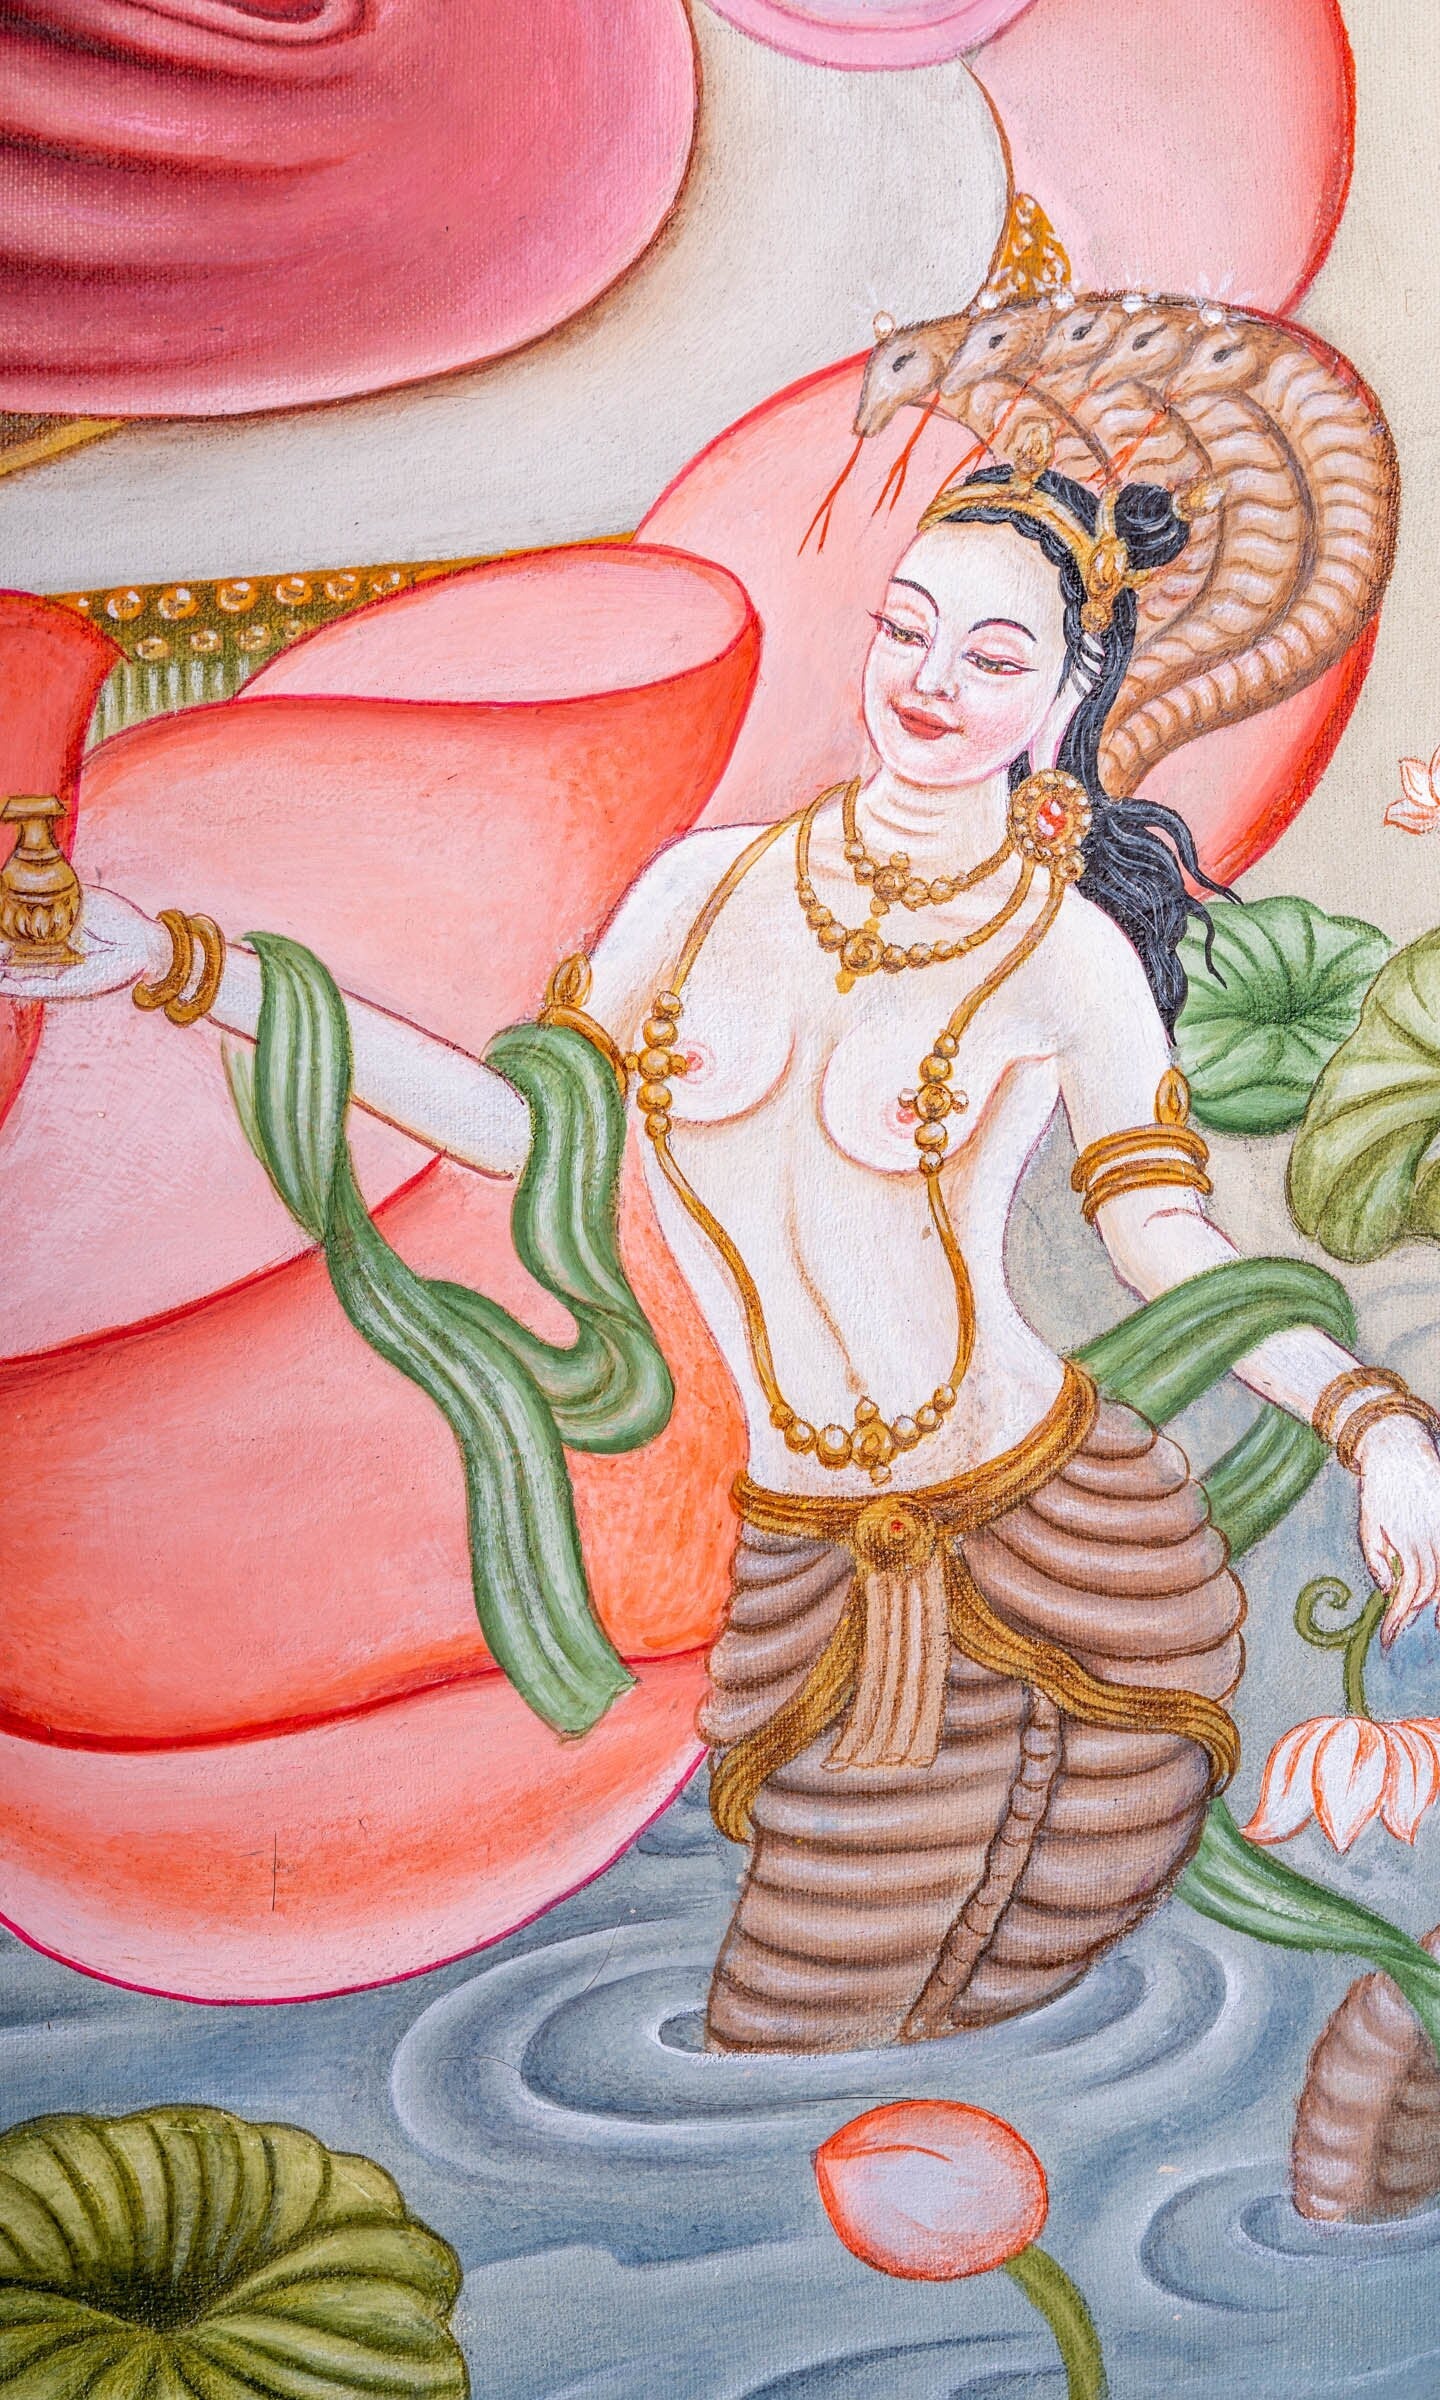 Newari White Tara Thangka Painting - Lucky Thanka